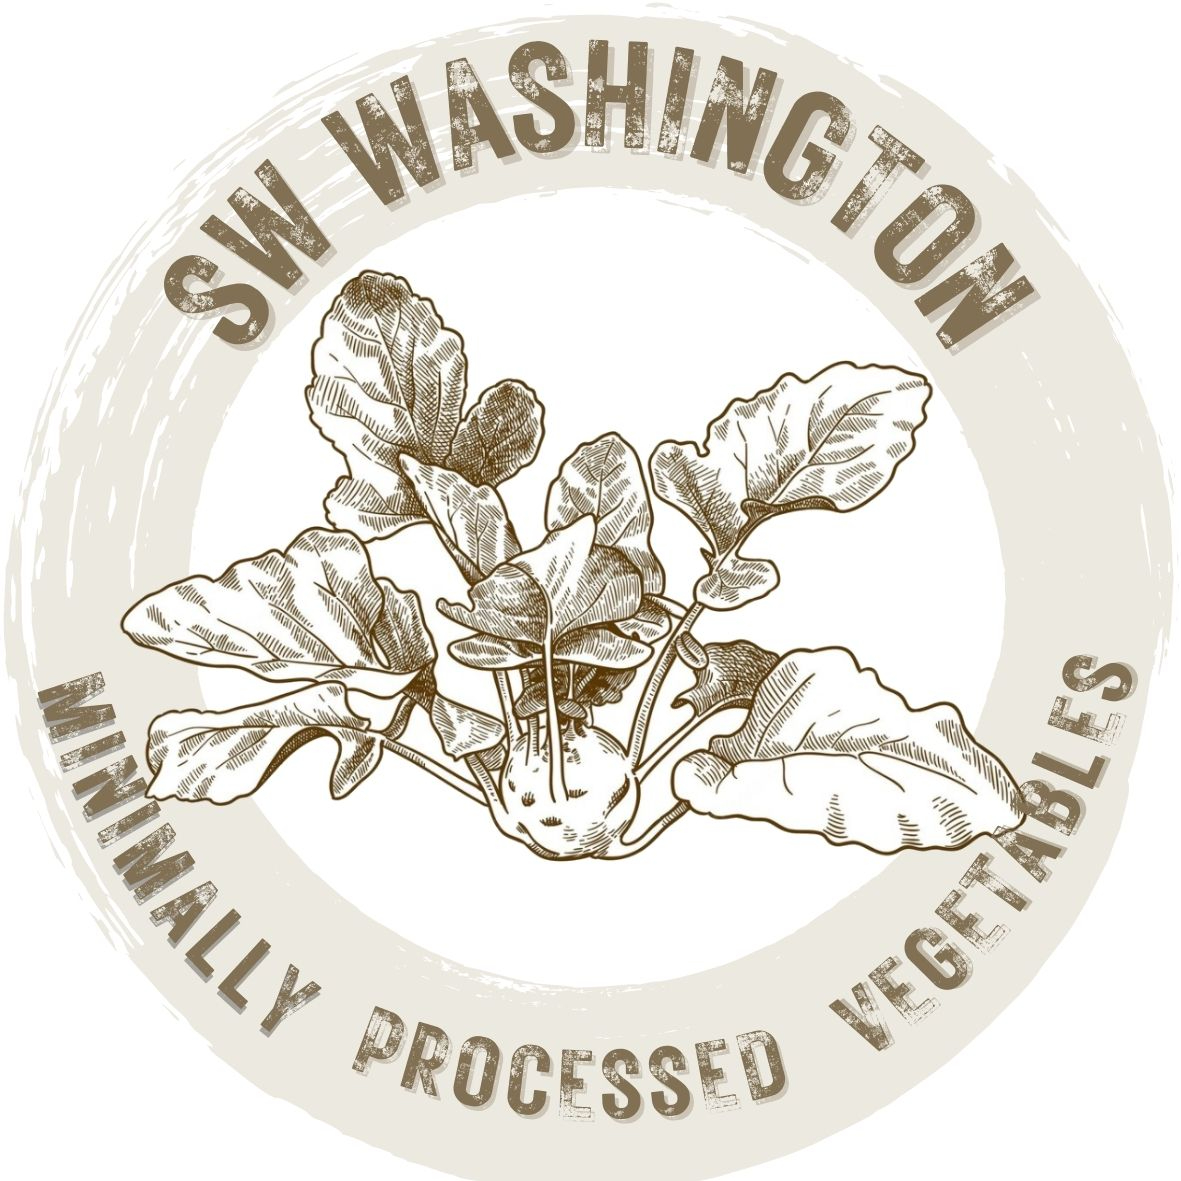 SW Washington Minimally Processed Vegetables